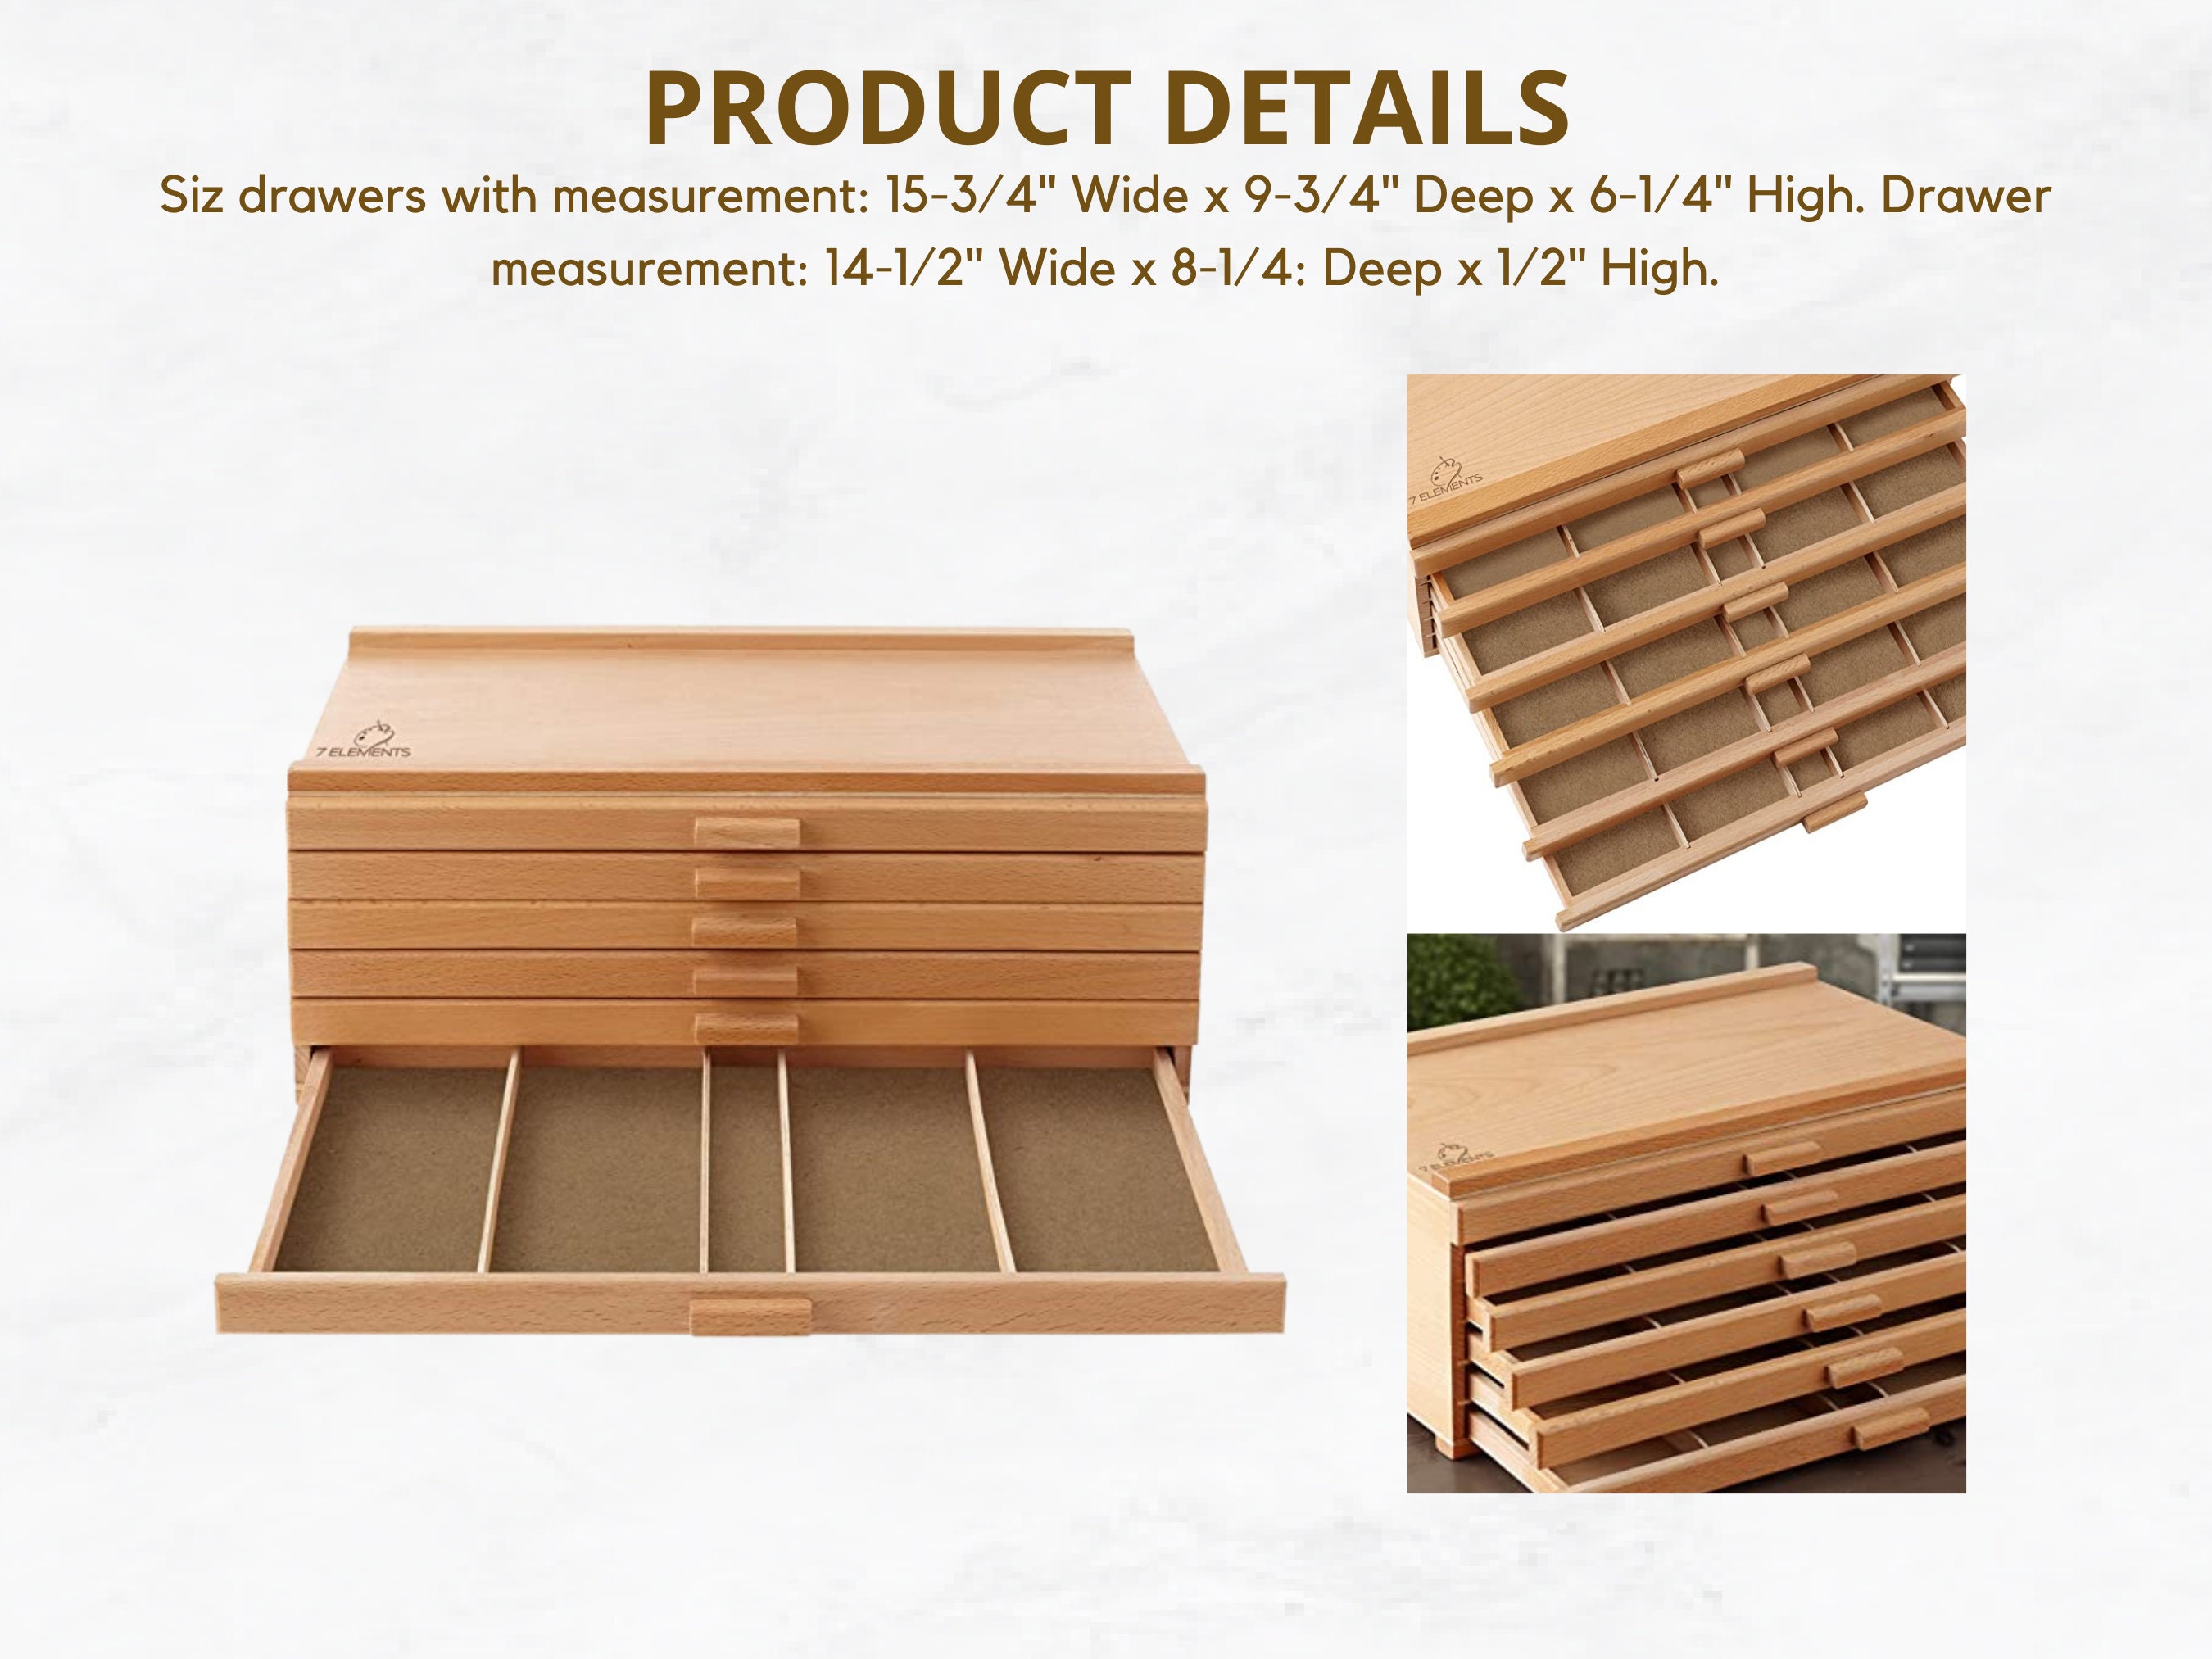 6 Drawer Beechwood Artist Storage Supply Tool Box - 7 Elements, 6